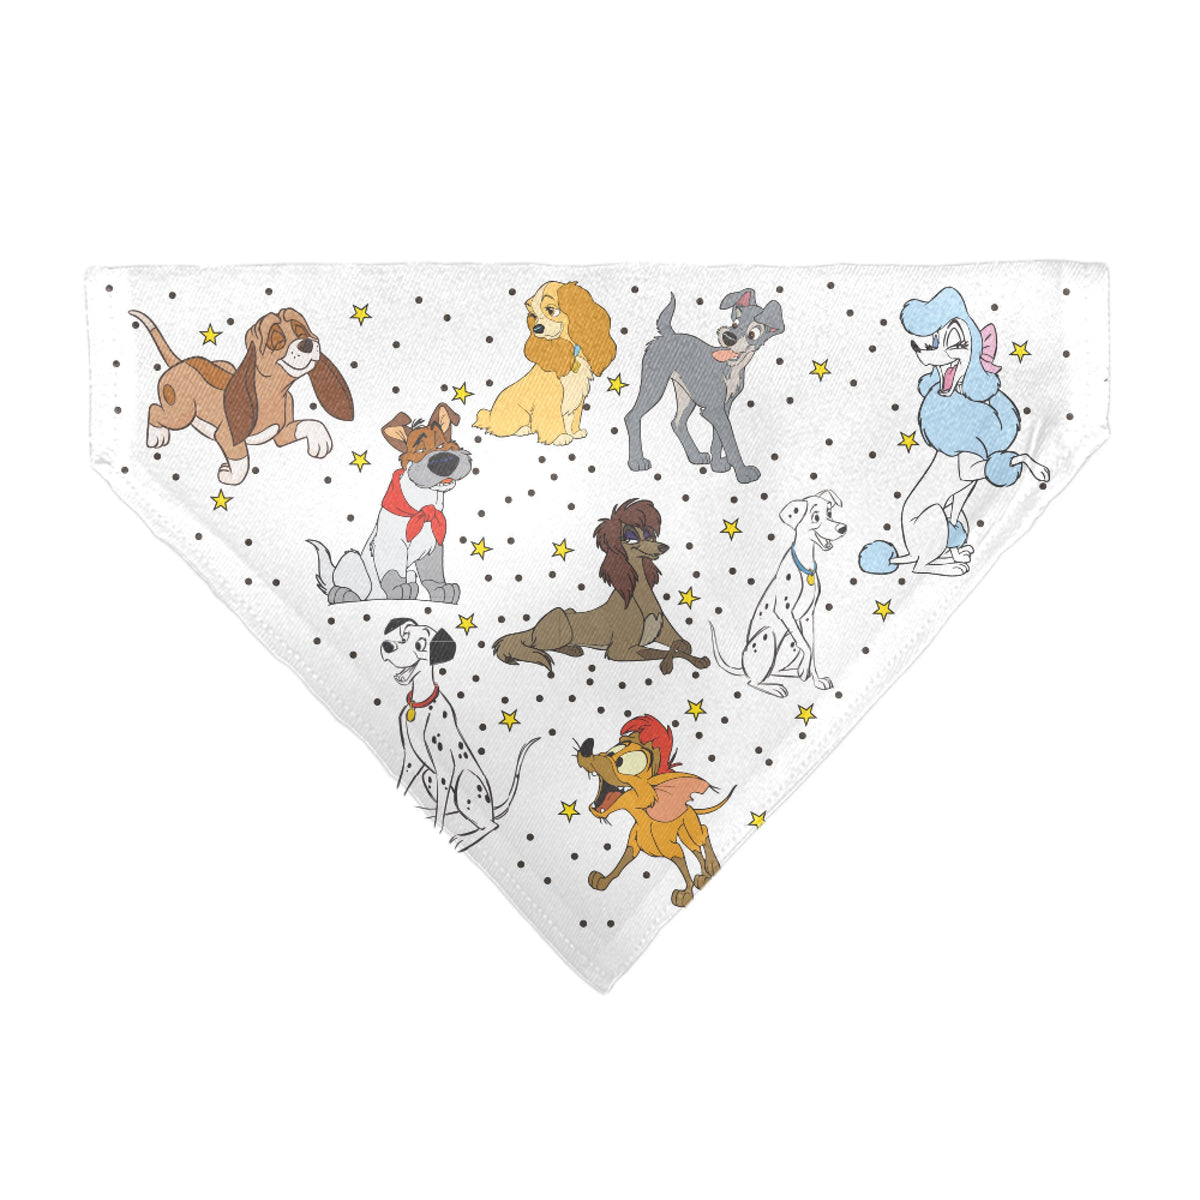 Pet Bandana - Disney Dogs 9-Dog Group Collage/Stars White/Black/Yellow